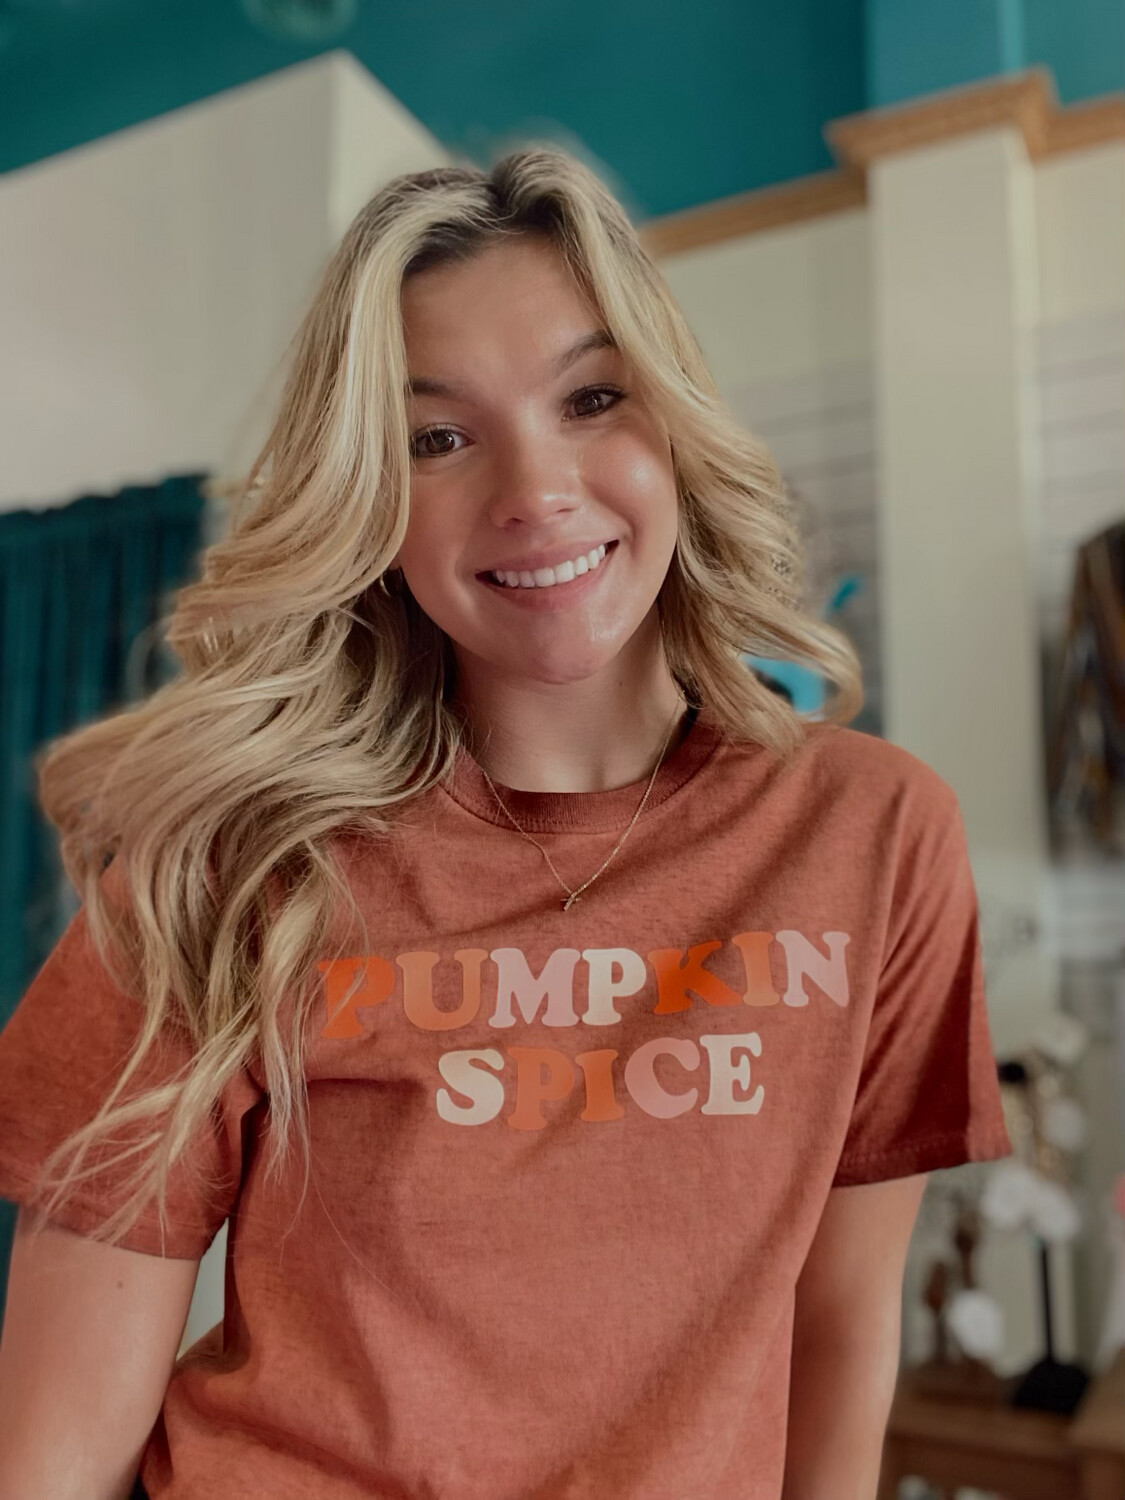 P Spice T-Shirt